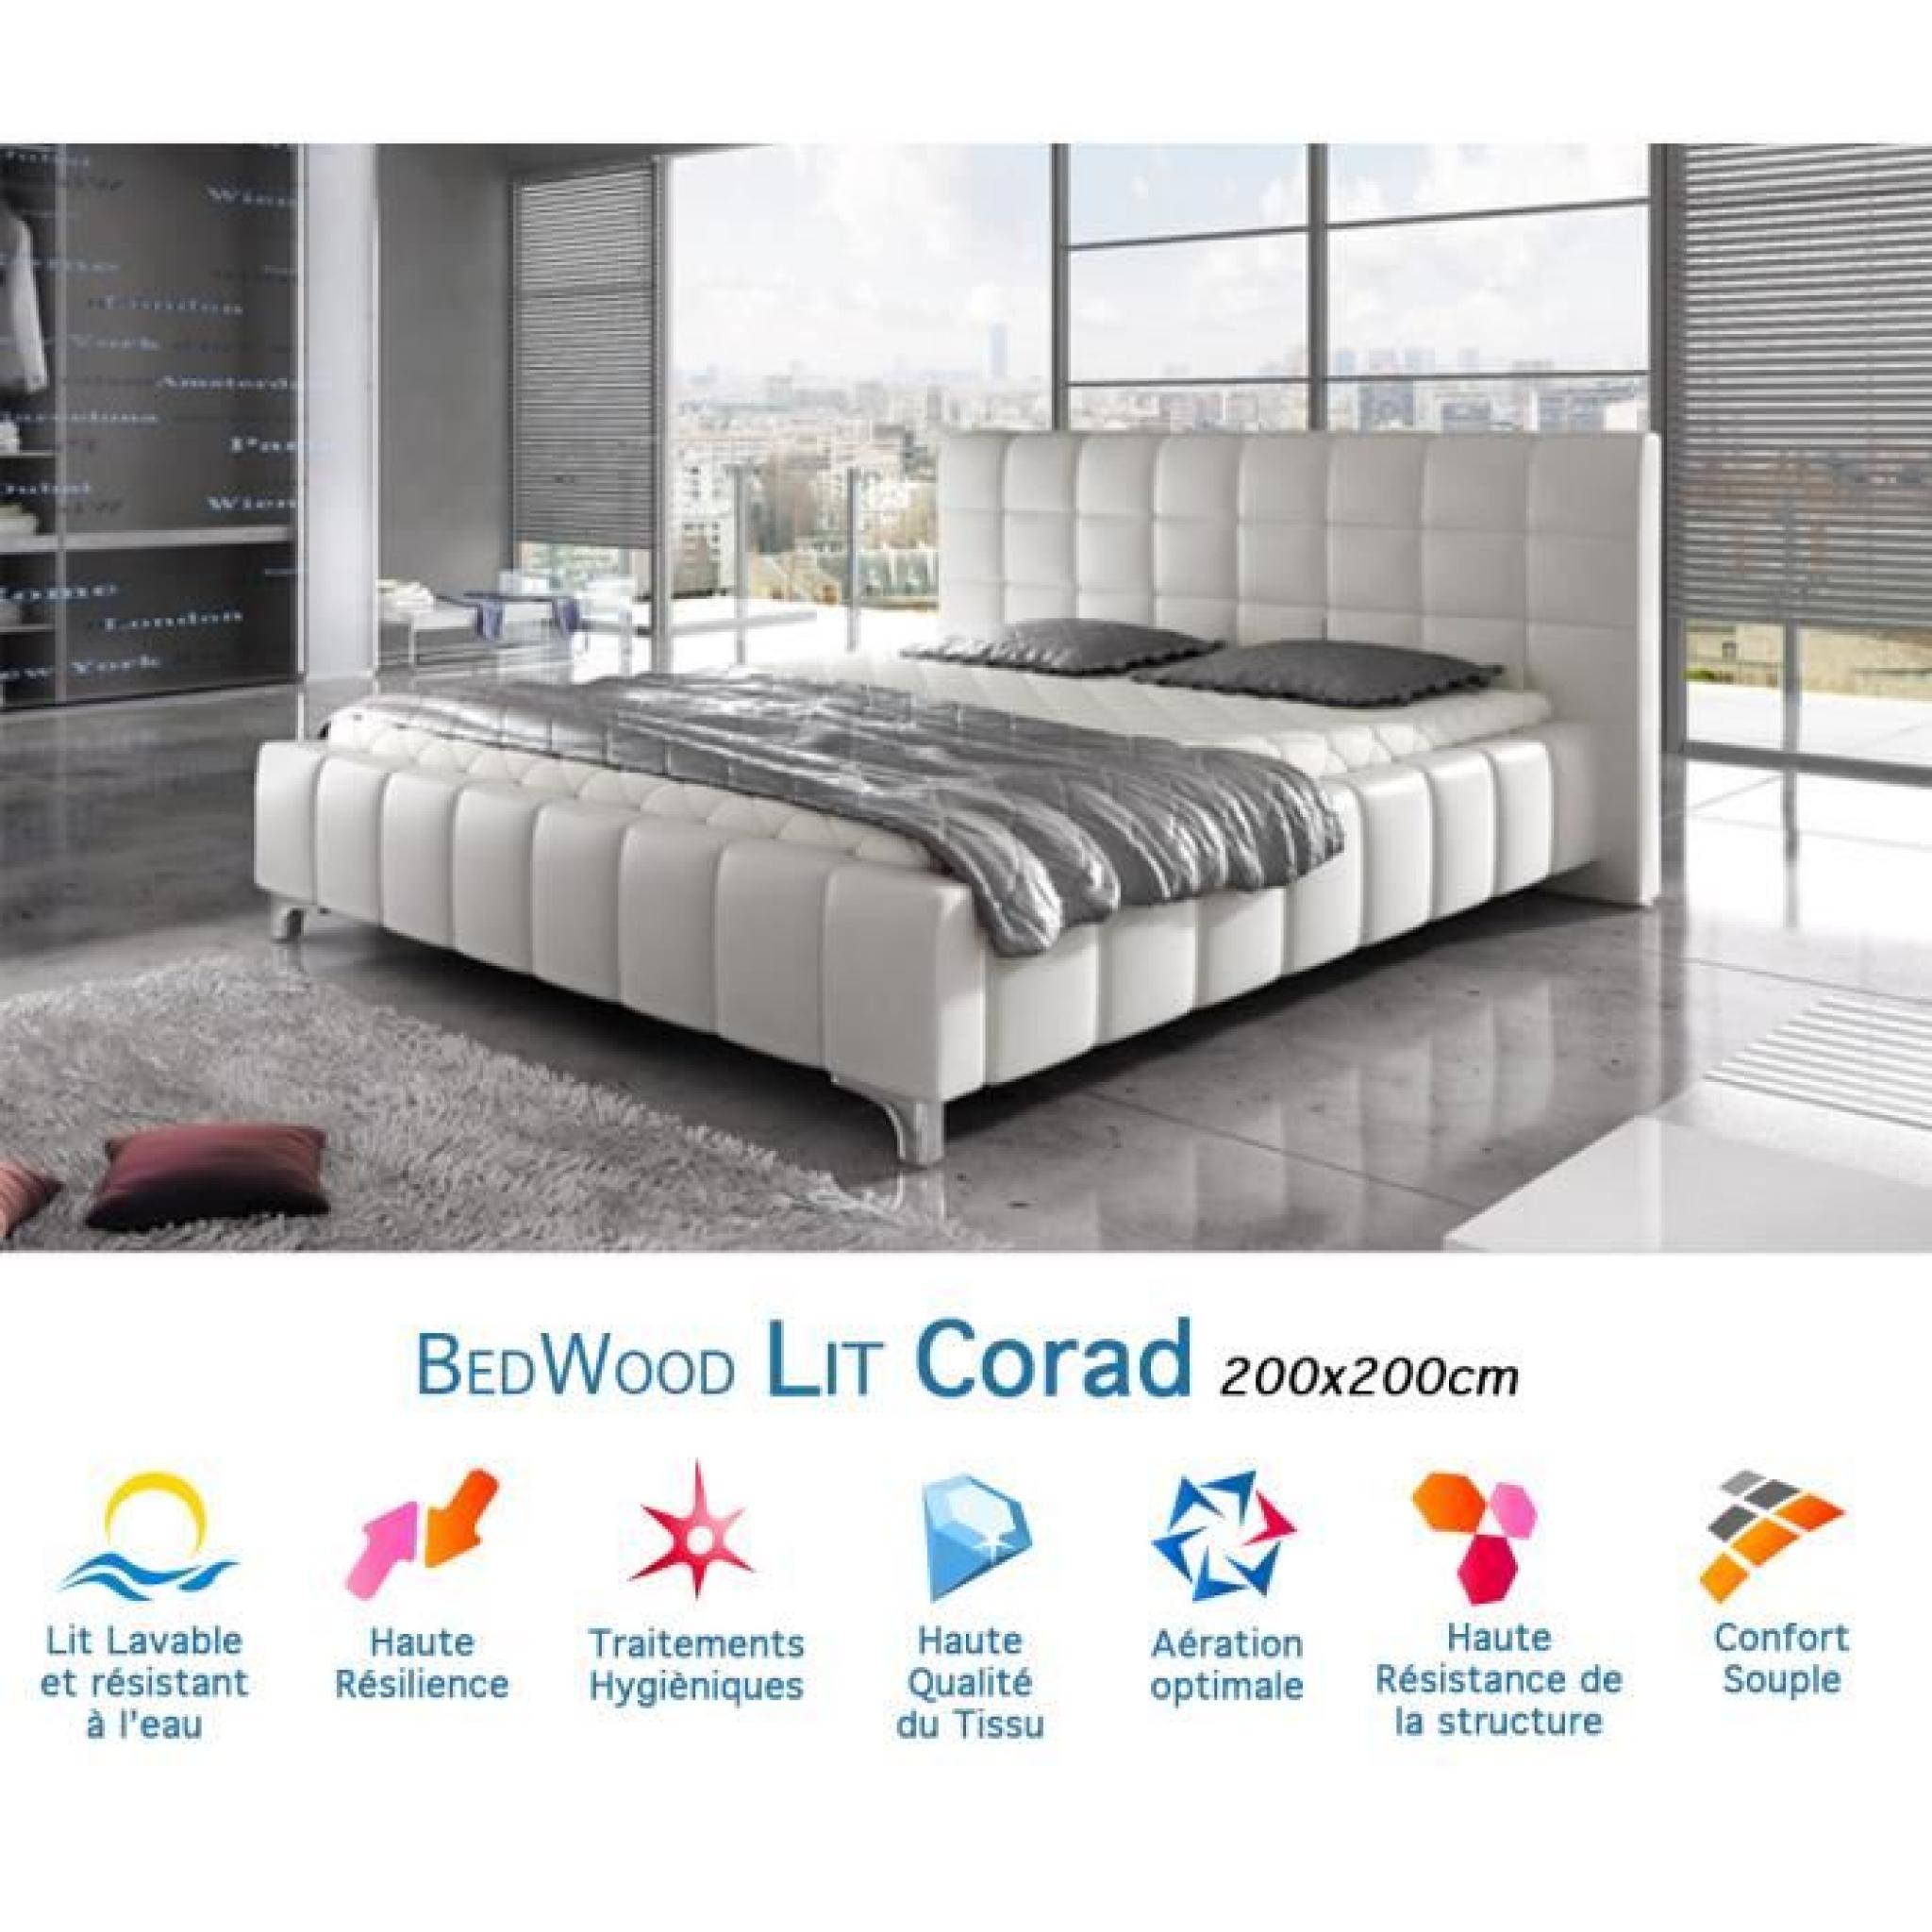 Lit Design Bedwood Corad 200x200cm